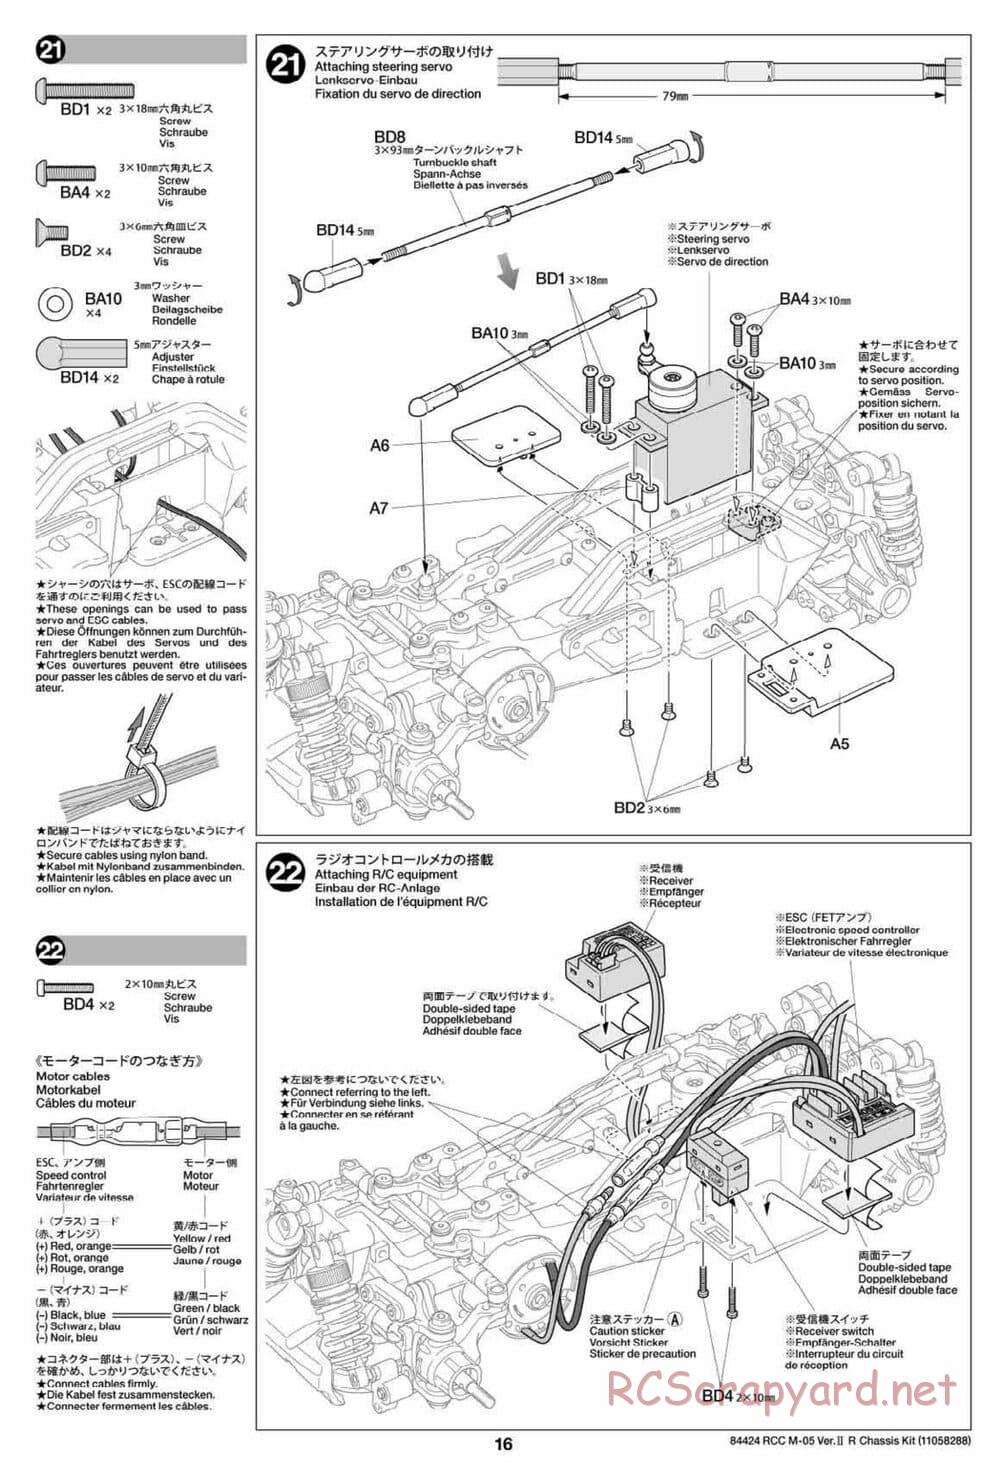 Tamiya - M-05 Ver.II R Chassis Chassis - Manual - Page 16